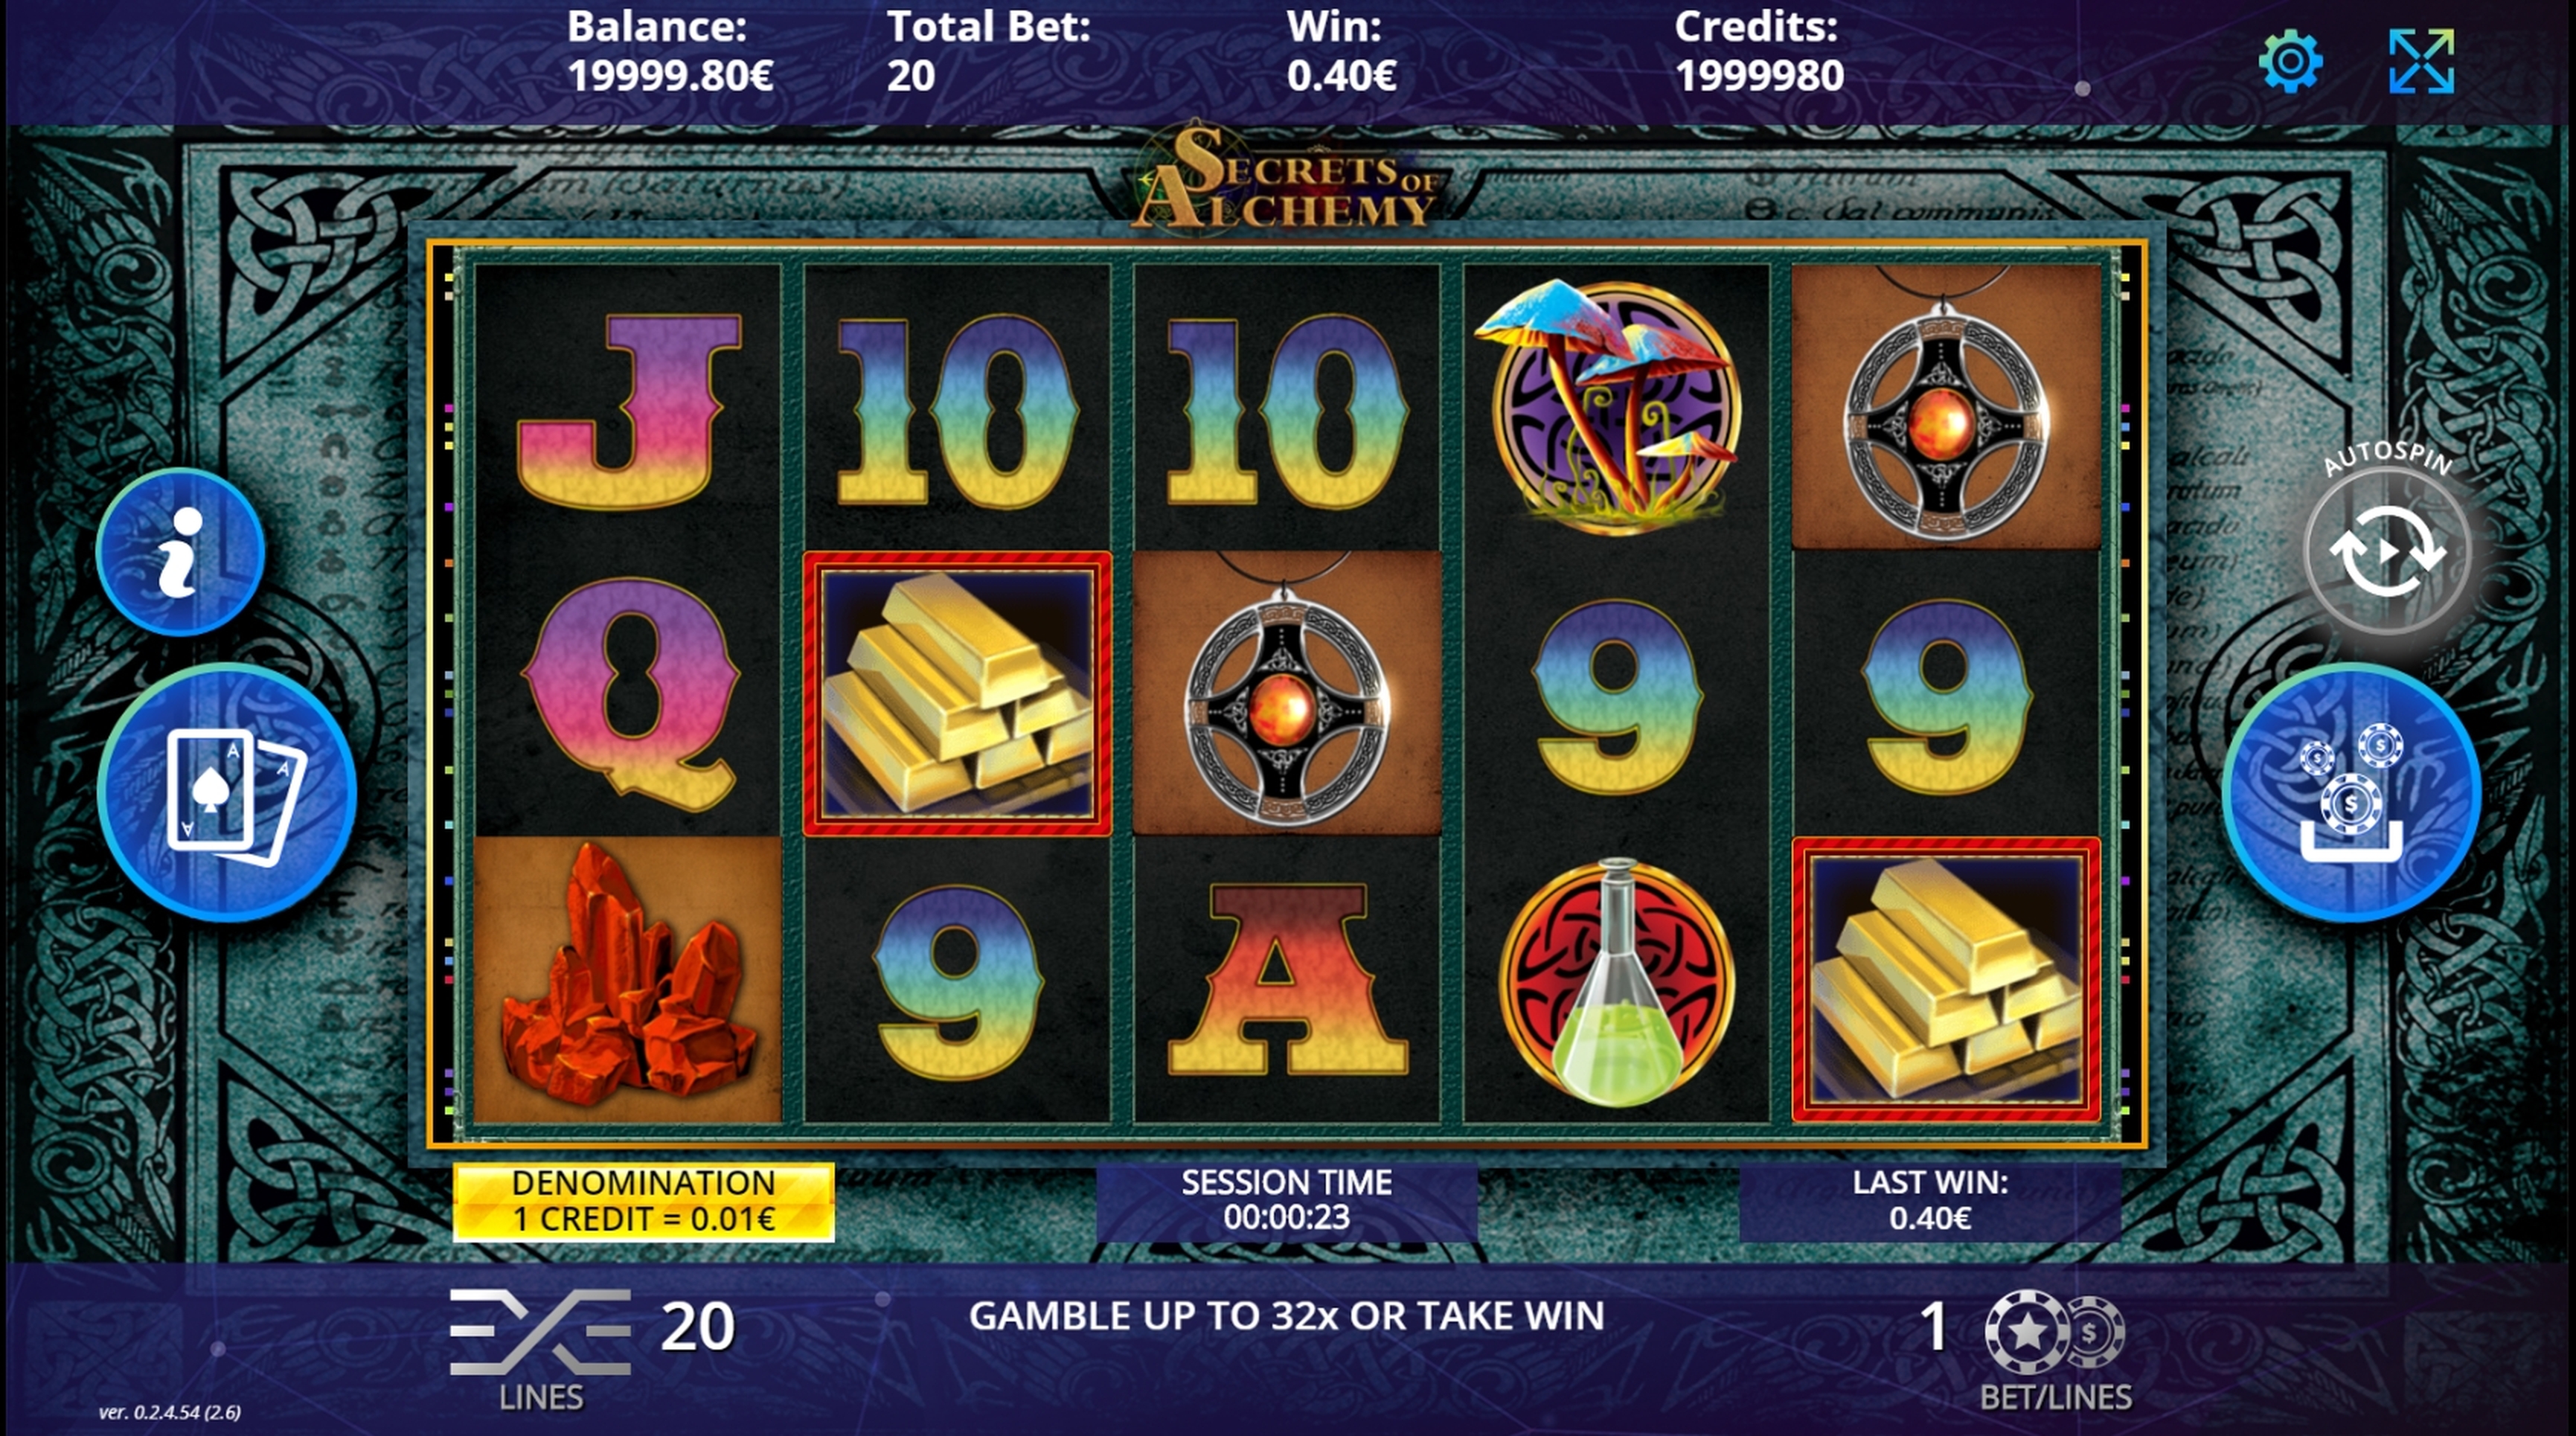 Win Money in Secrets of Alchemy Free Slot Game by DLV